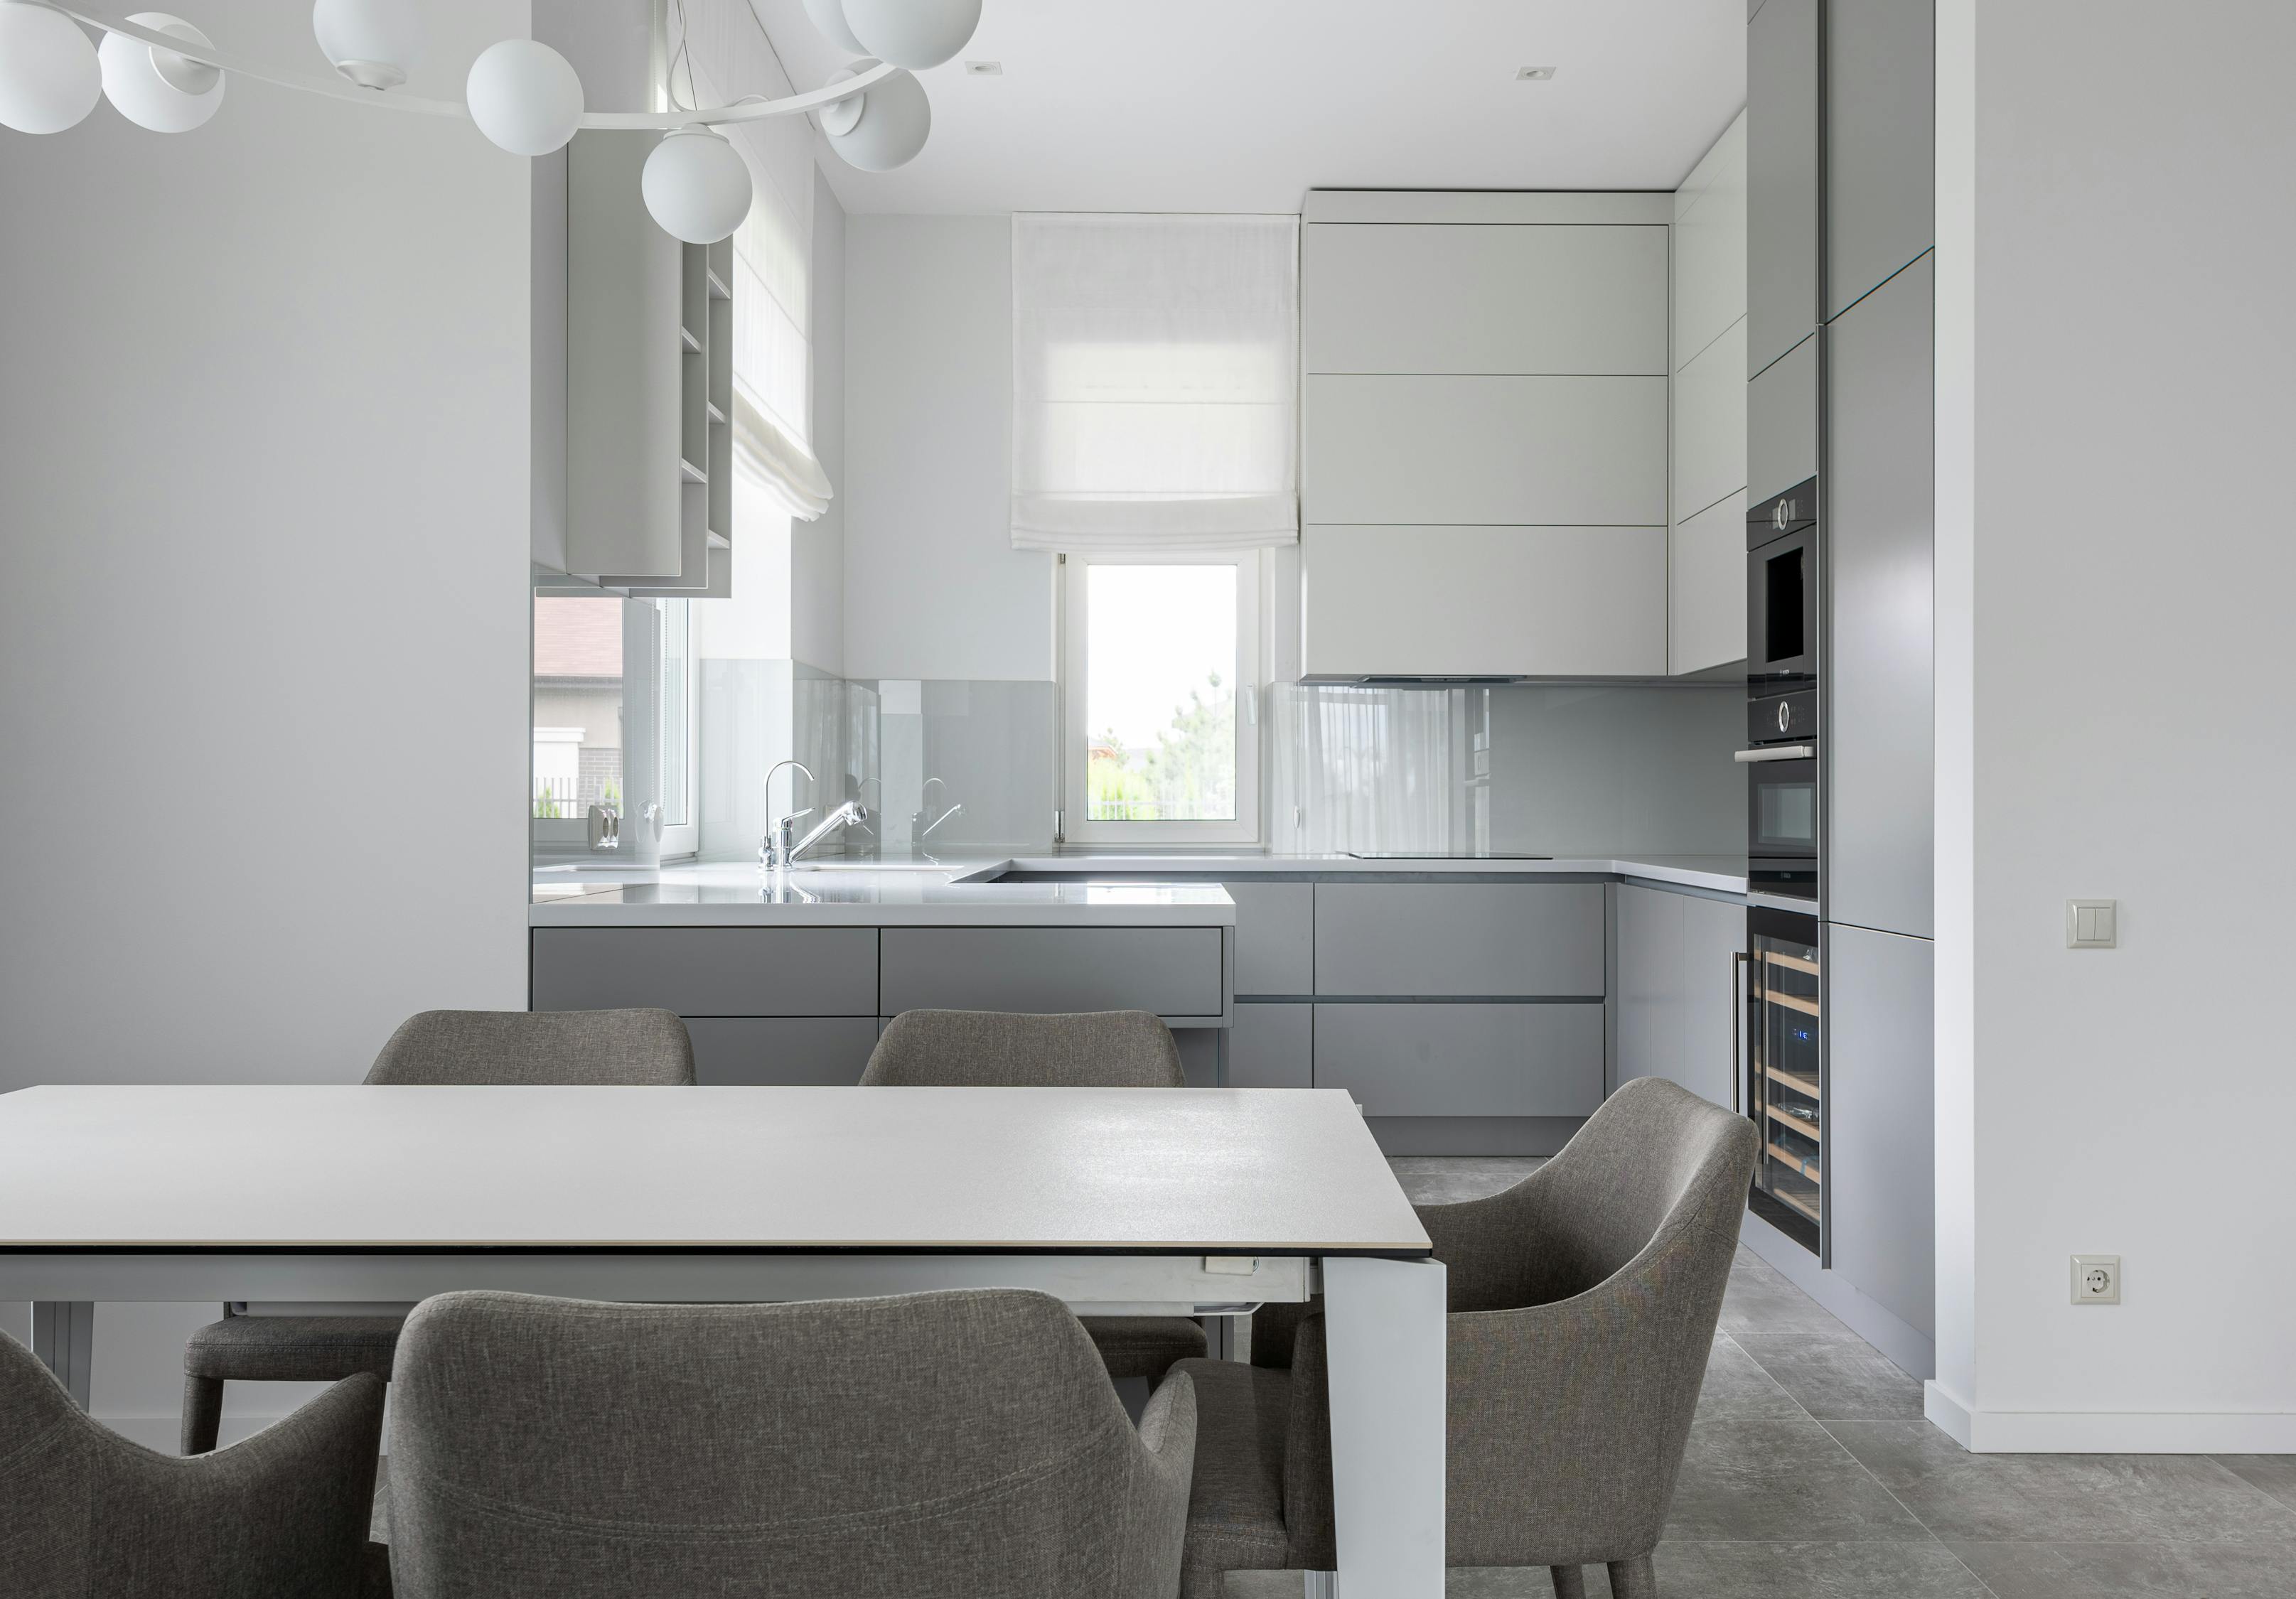 Modern kitchen with white simple design · Free Stock Photo